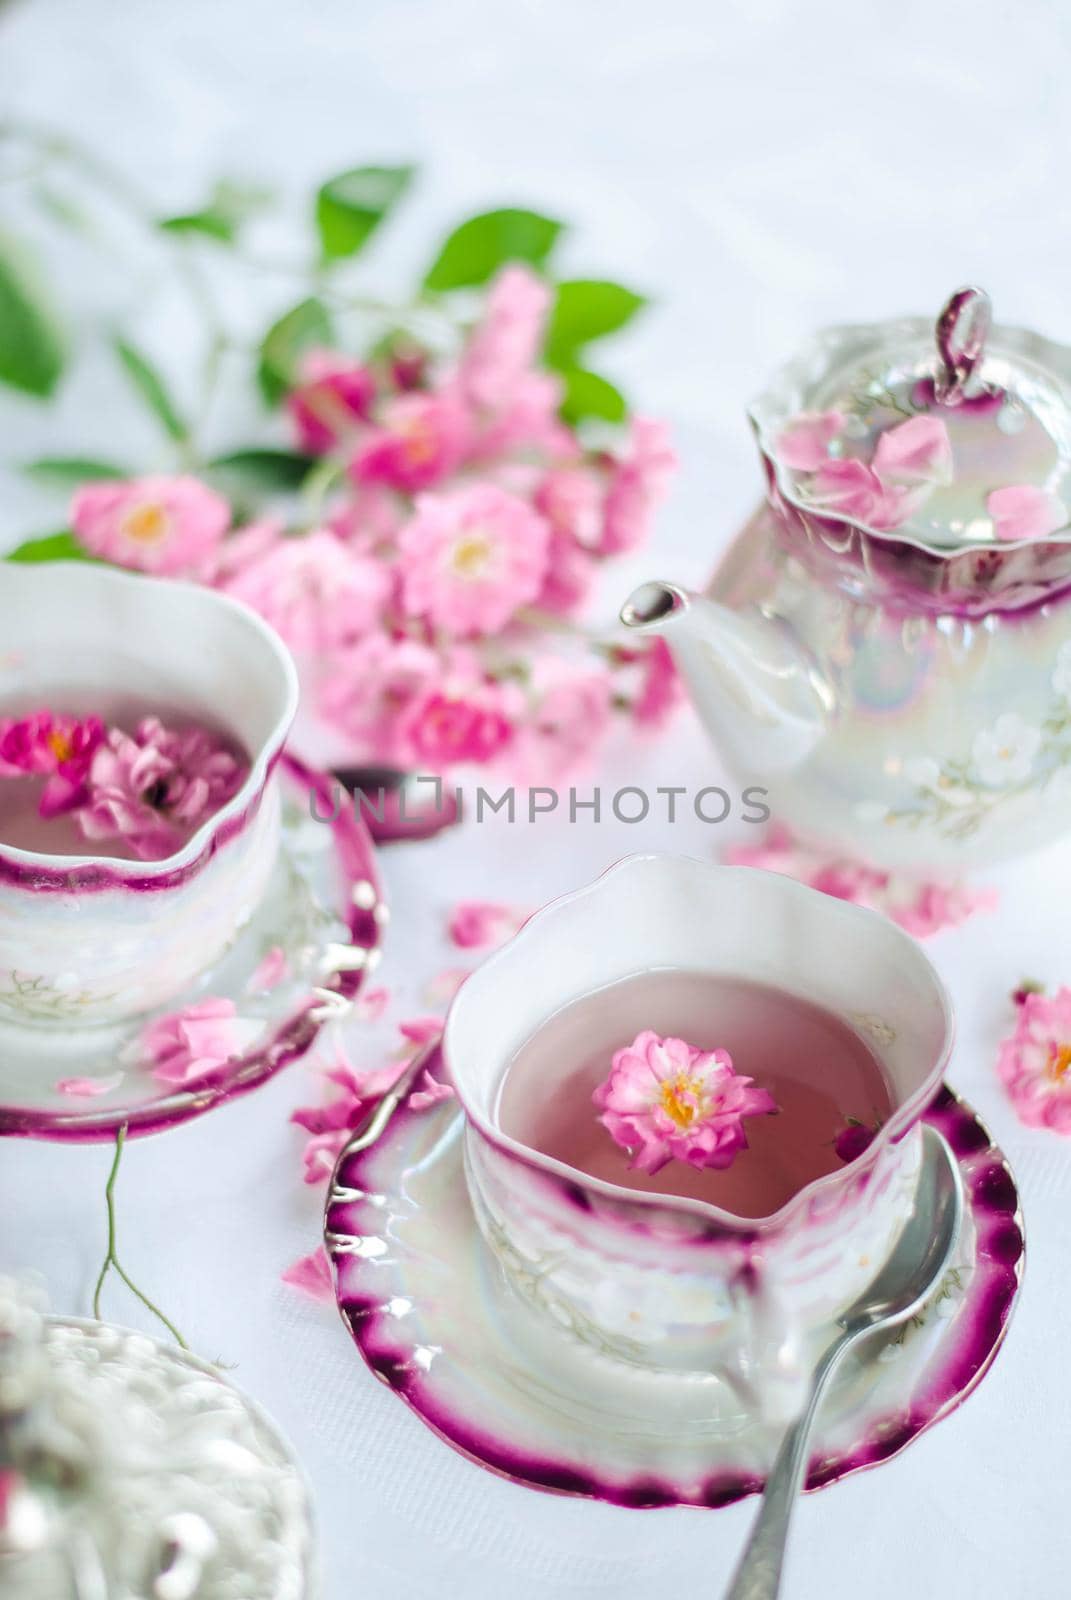 retro porcelain cup of hot rose tea. High quality photo